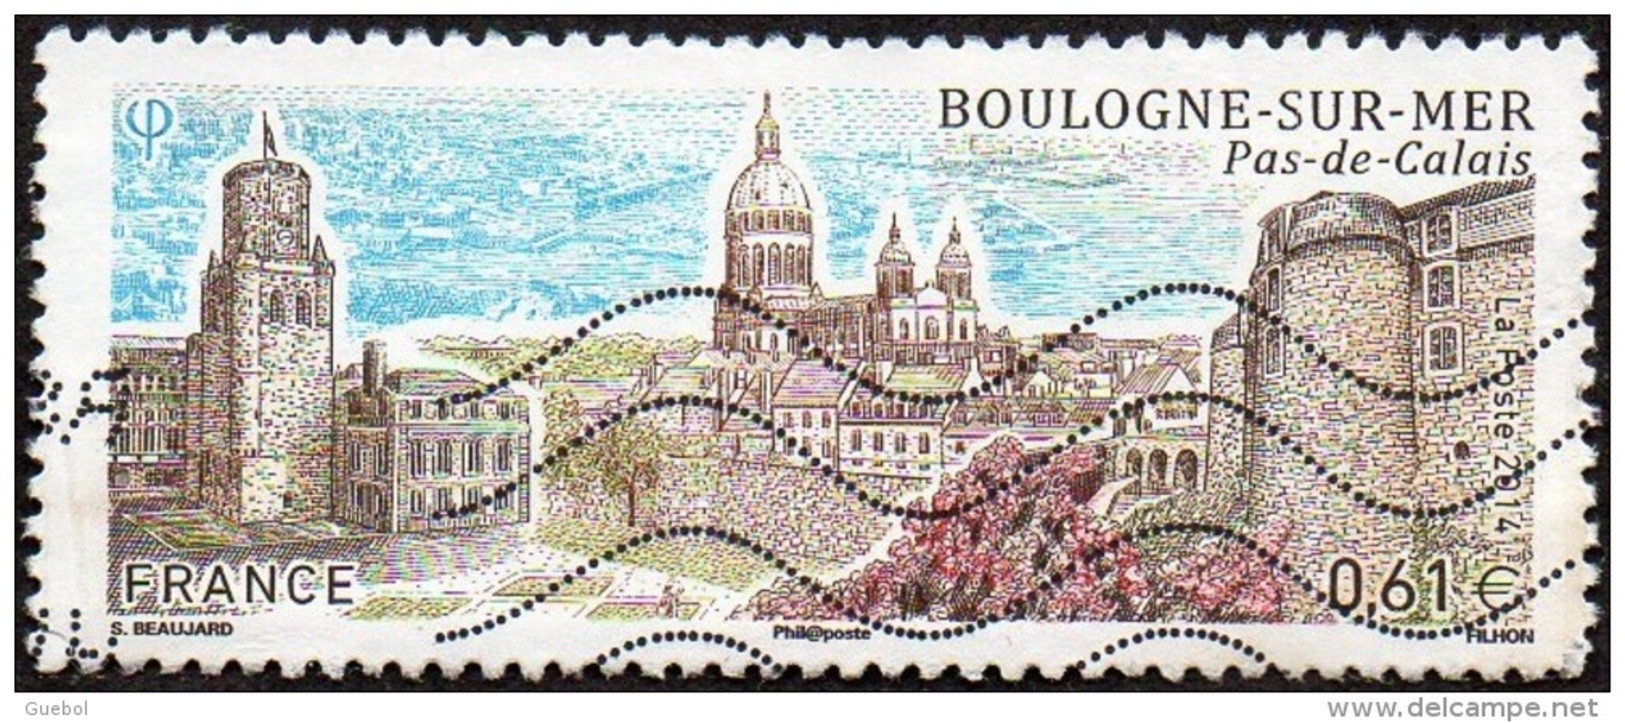 France Oblitération Moderne N° 4862 - Boulogne-sur-mer (Pas-de-Calais) - Used Stamps